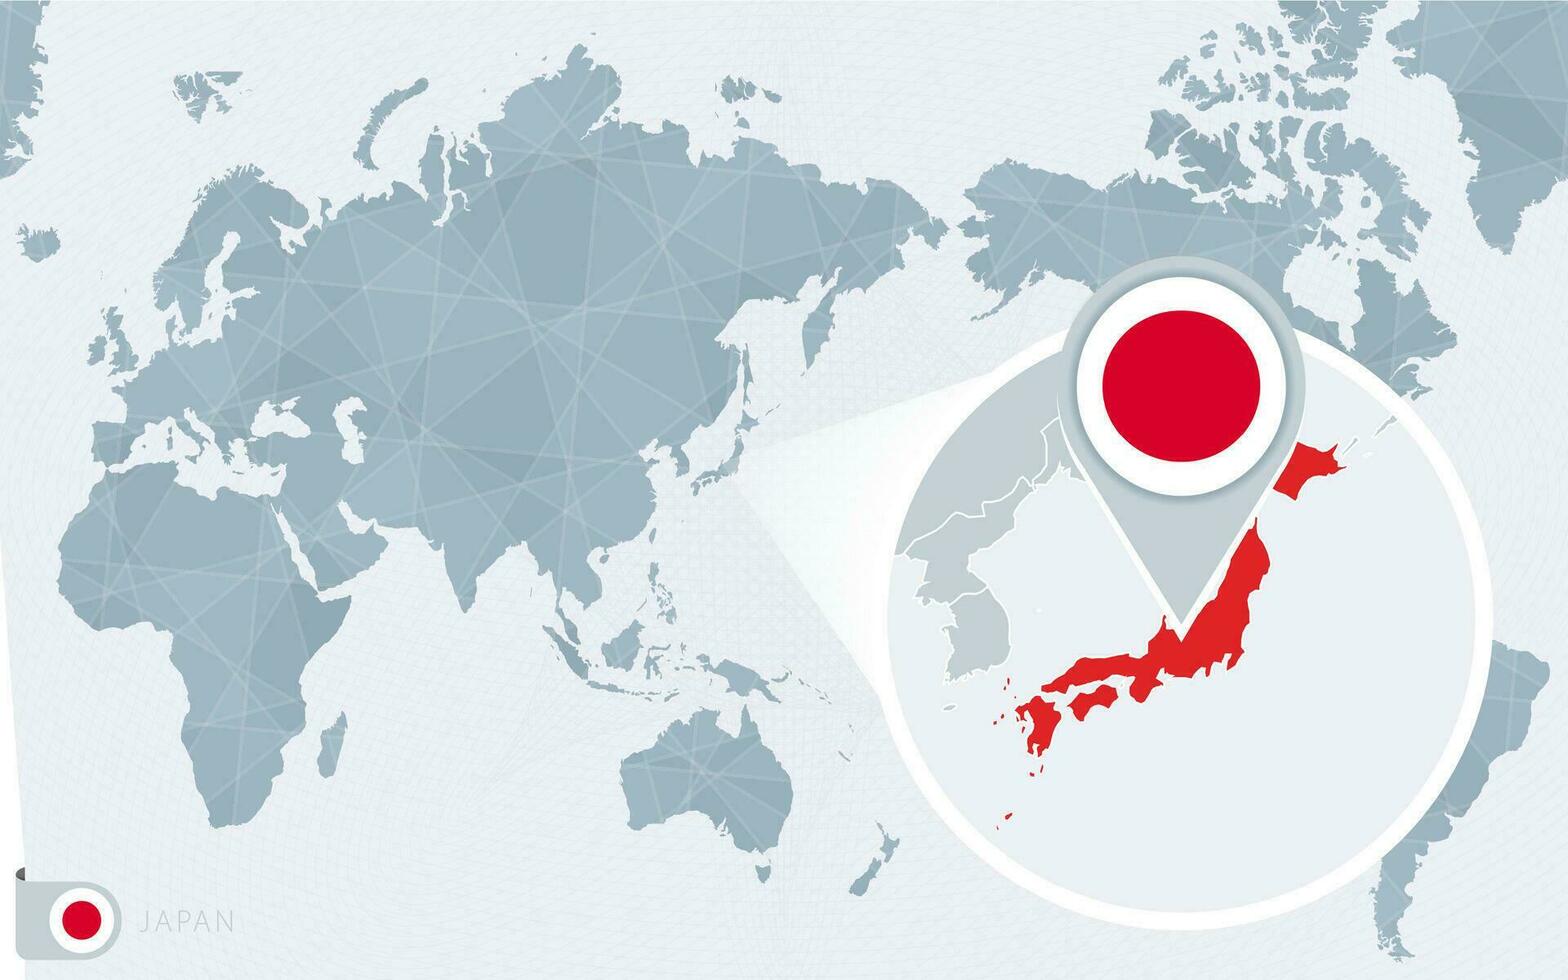 grote Oceaan gecentreerd wereld kaart met uitvergroot Japan. vlag en kaart van Japan. vector